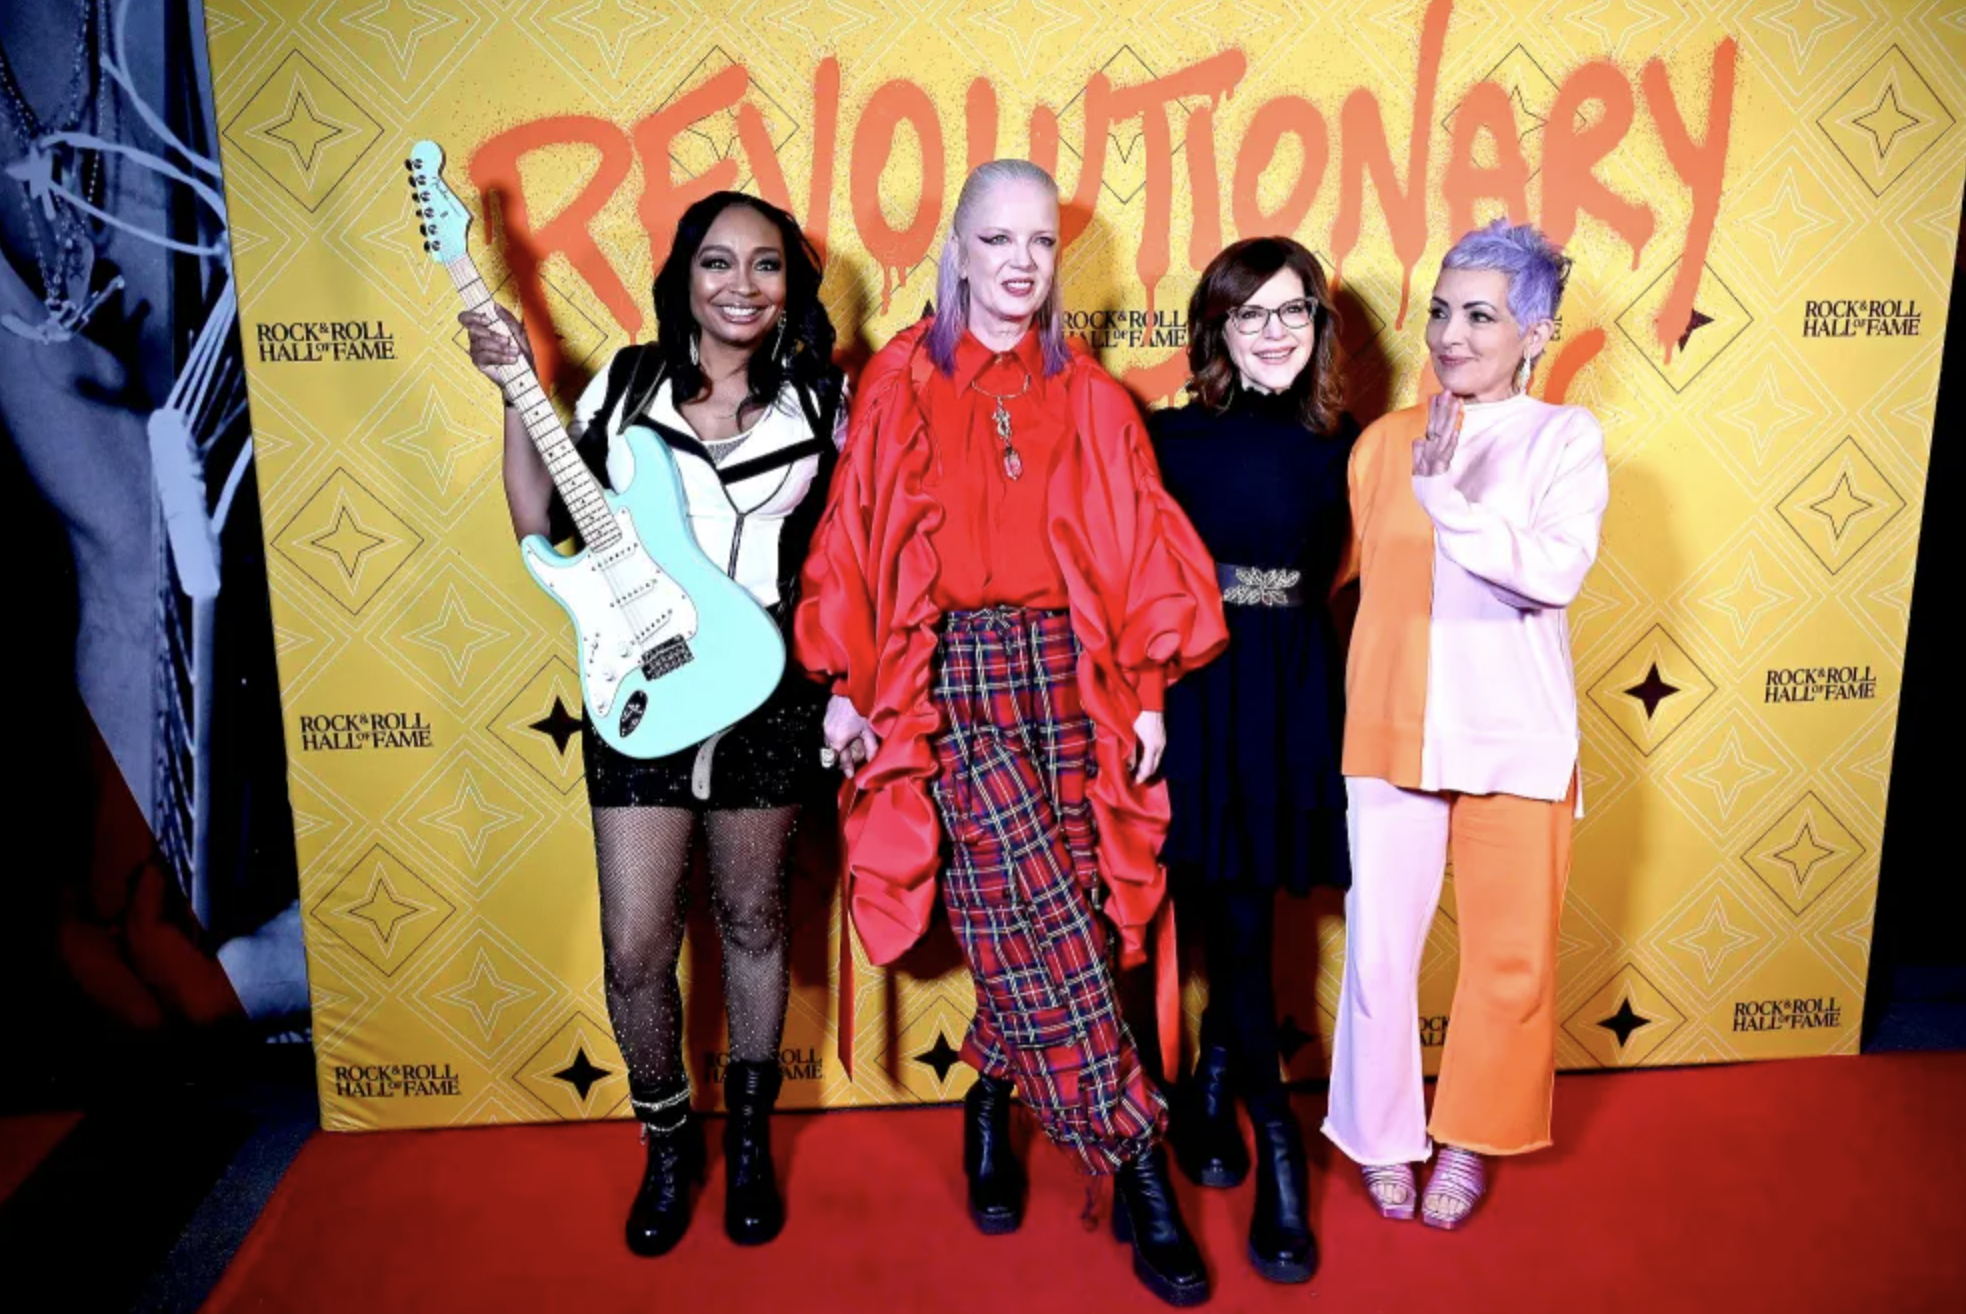 Shirley Manson’s Rock Hall Exhibit: Spotlight on Women Breaking Boundaries!